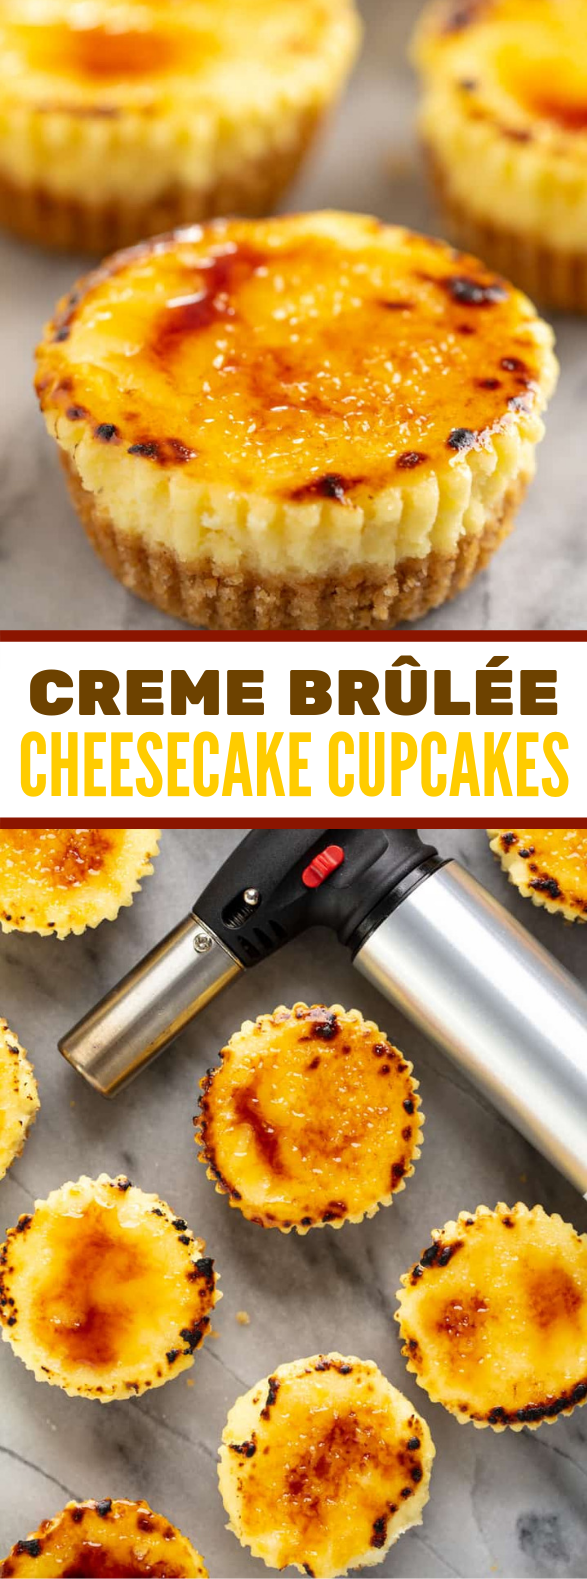 CREME BRÛLÉE CHEESECAKE CUPCAKES #desserts #cake